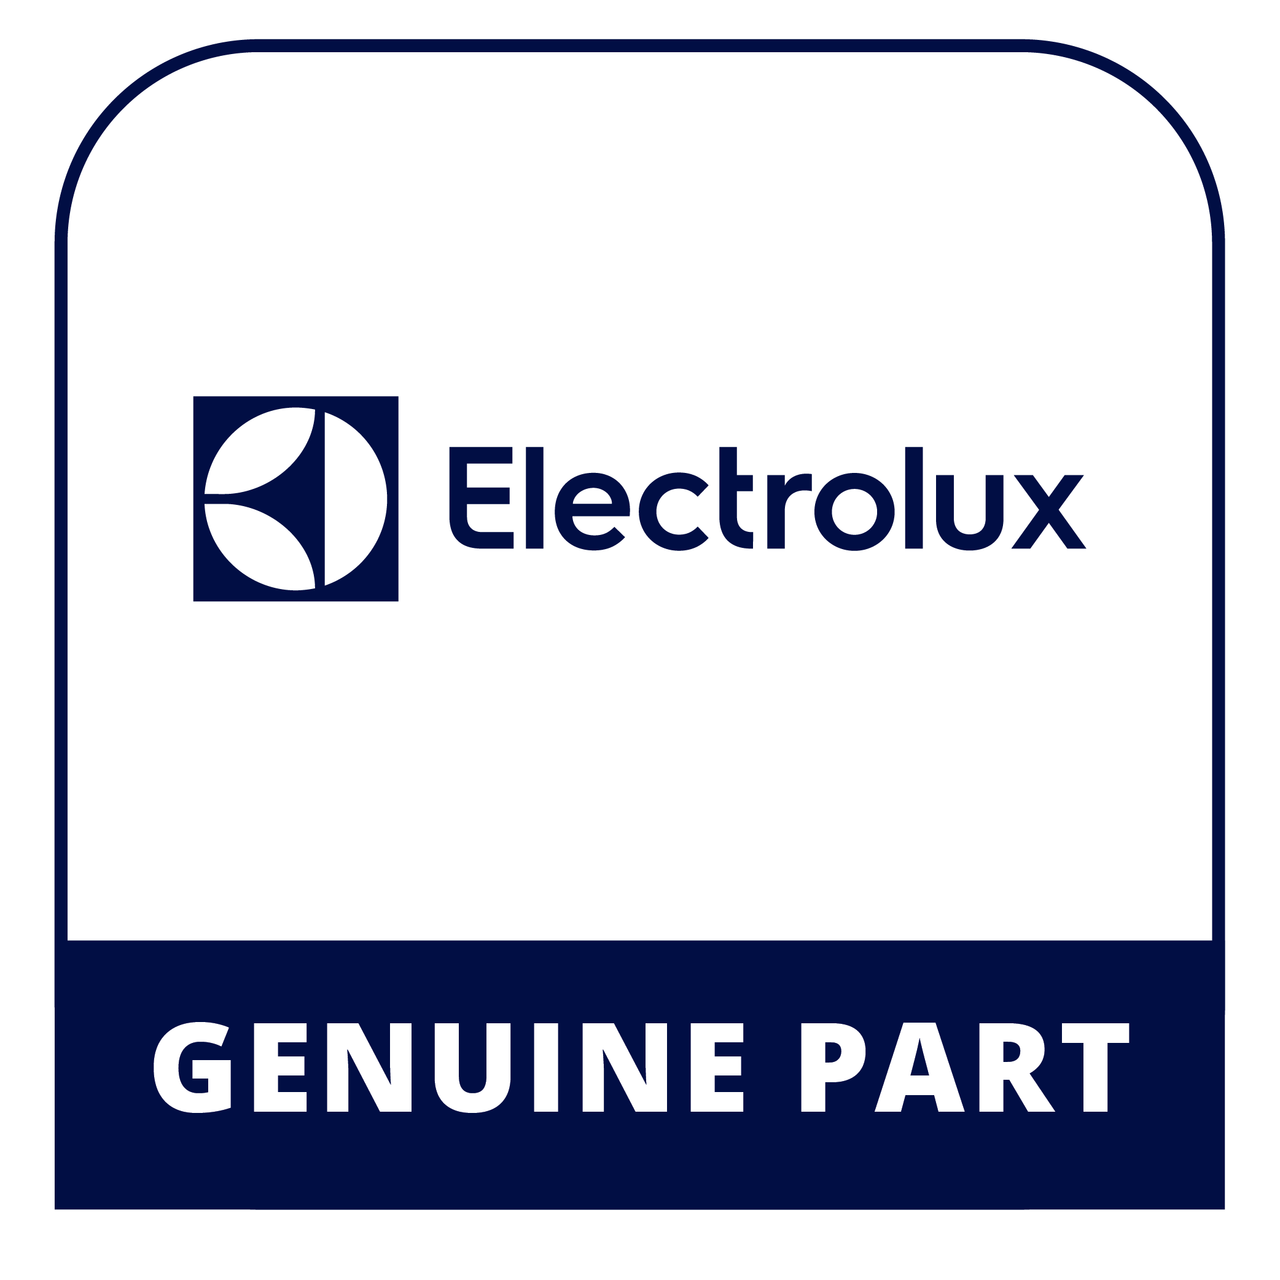 Frigidaire - Electrolux 139027805 Shield - Genuine Electrolux Part